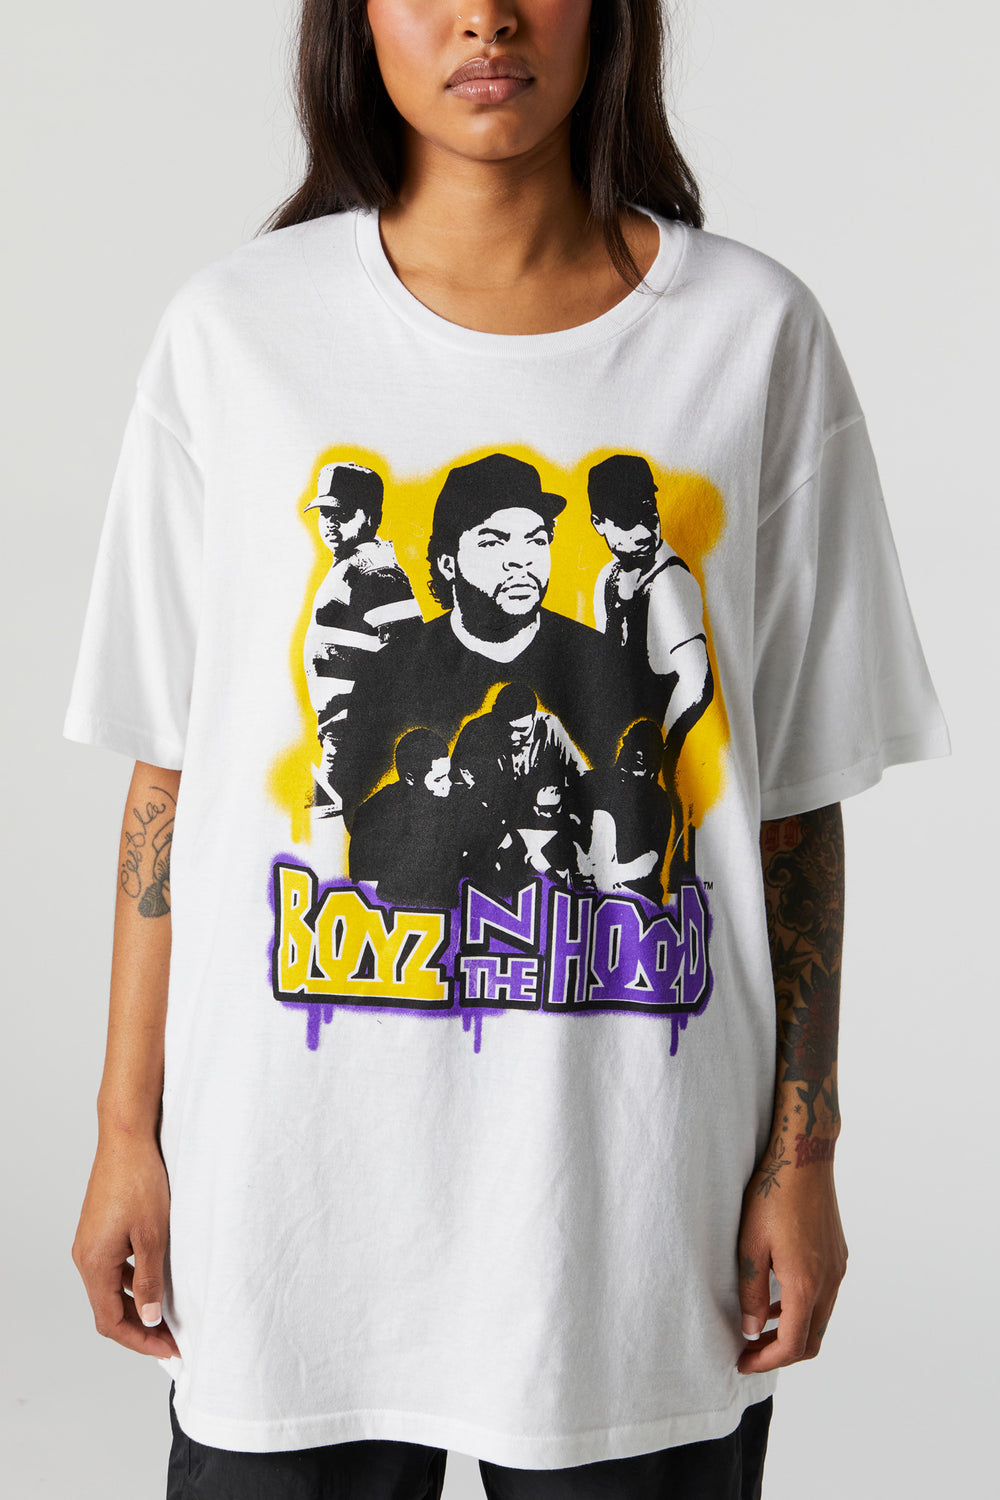 Boys N The Hood Graphic Boyfriend T-Shirt Boys N The Hood Graphic Boyfriend T-Shirt 2